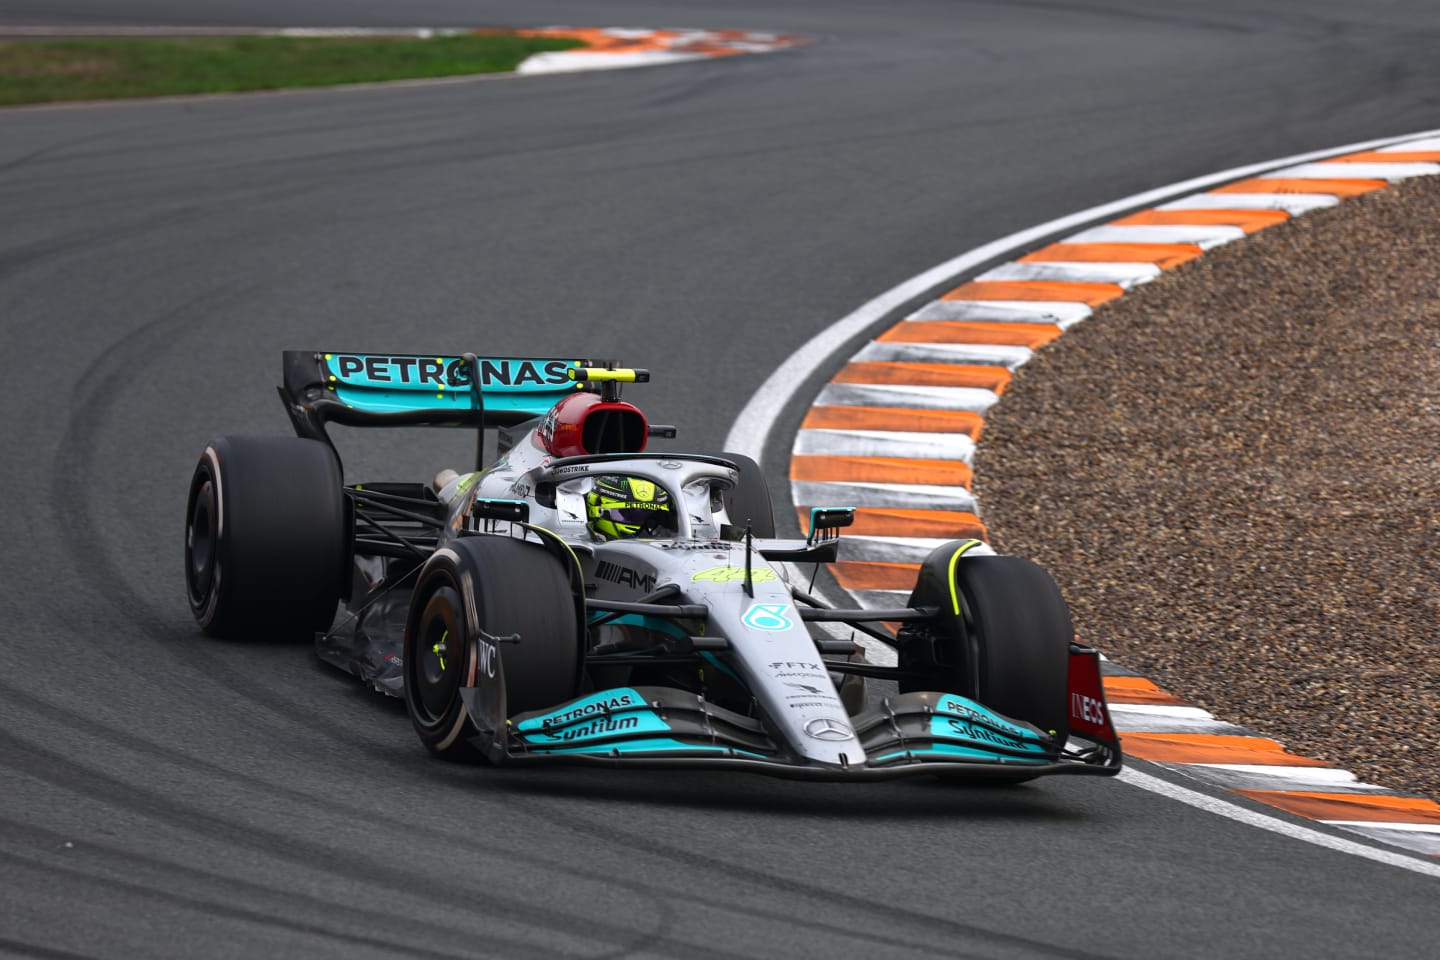 ZANDVOORT, NETHERLANDS - SEPTEMBER 04: Lewis Hamilton of Great Britain driving the (44) Mercedes